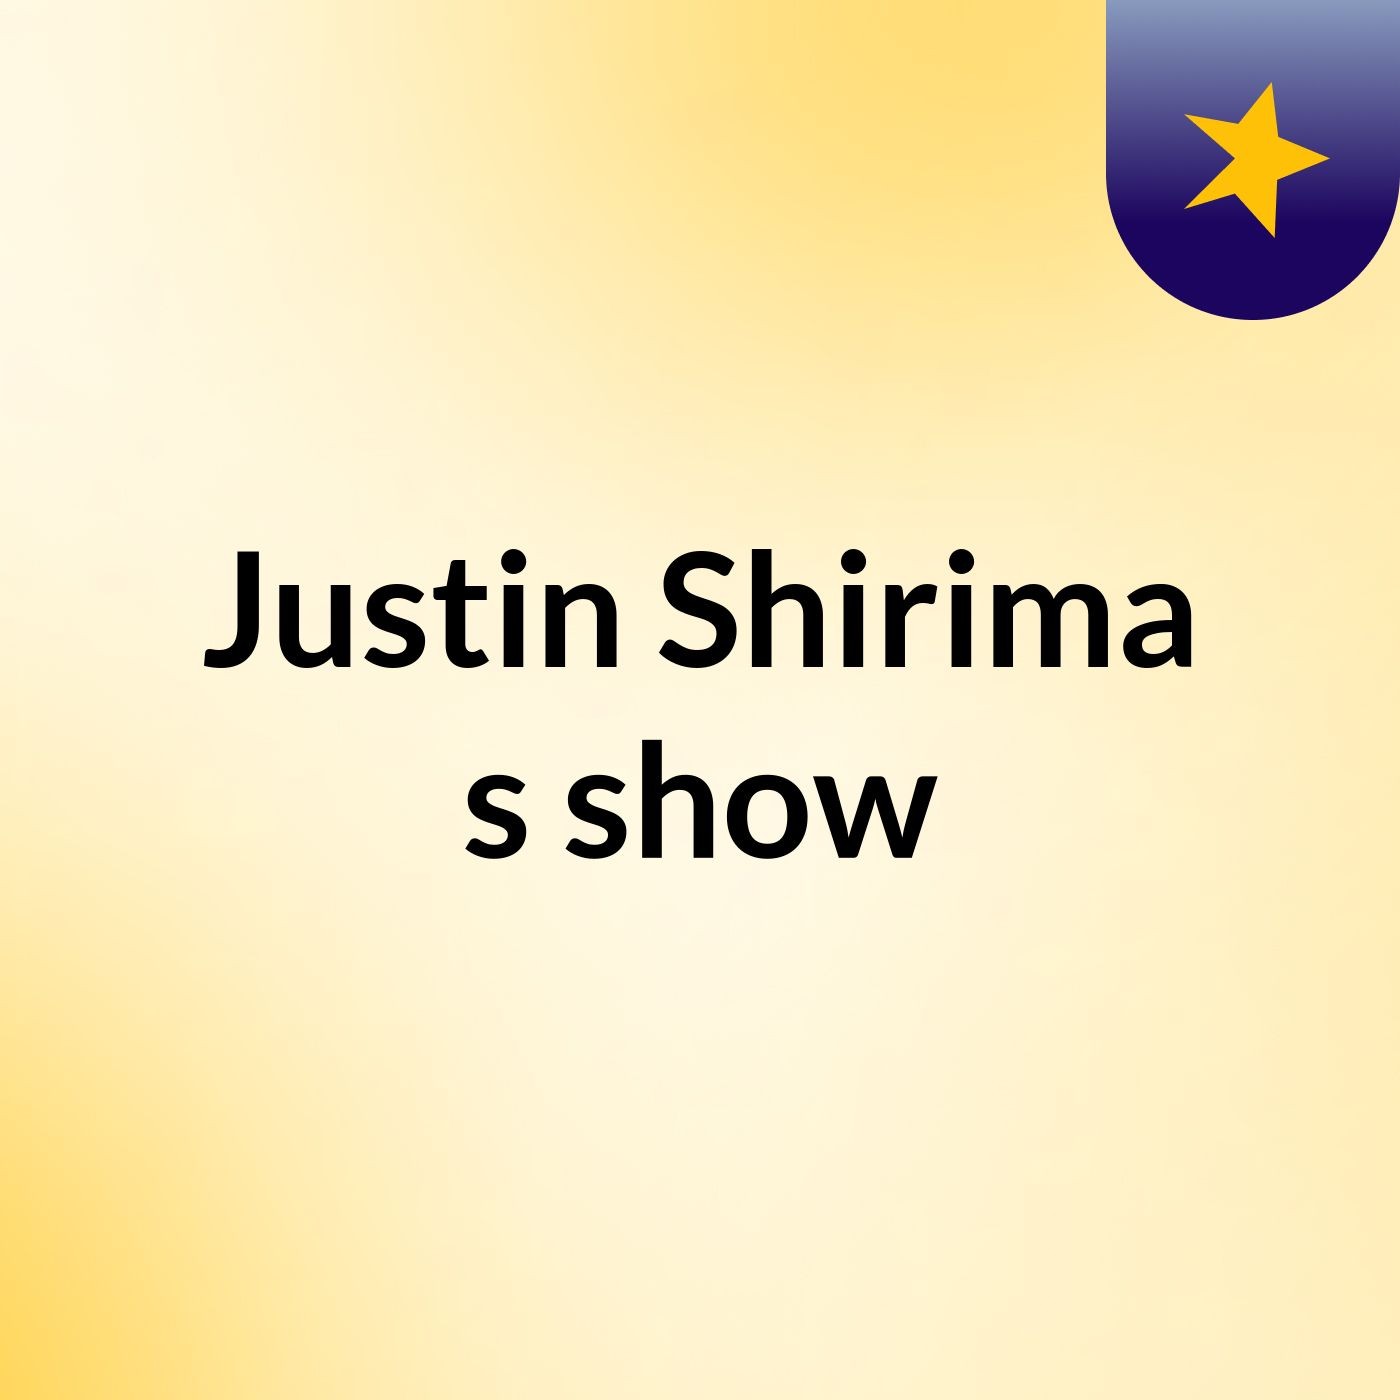 Justin Shirima's show